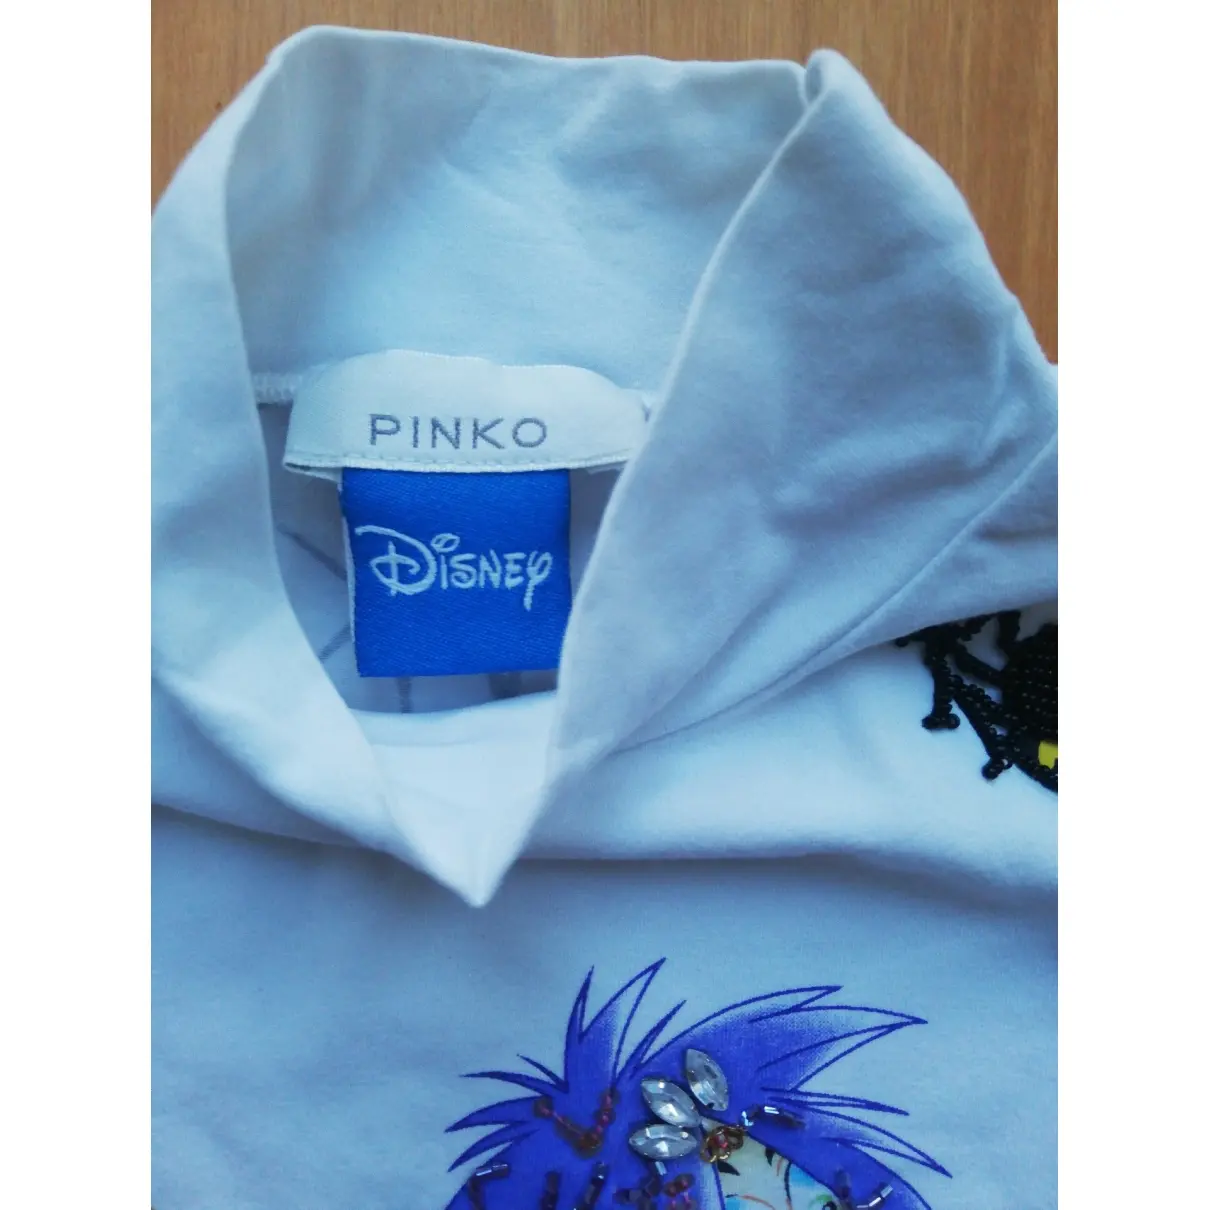 Buy Pinko T-shirt online